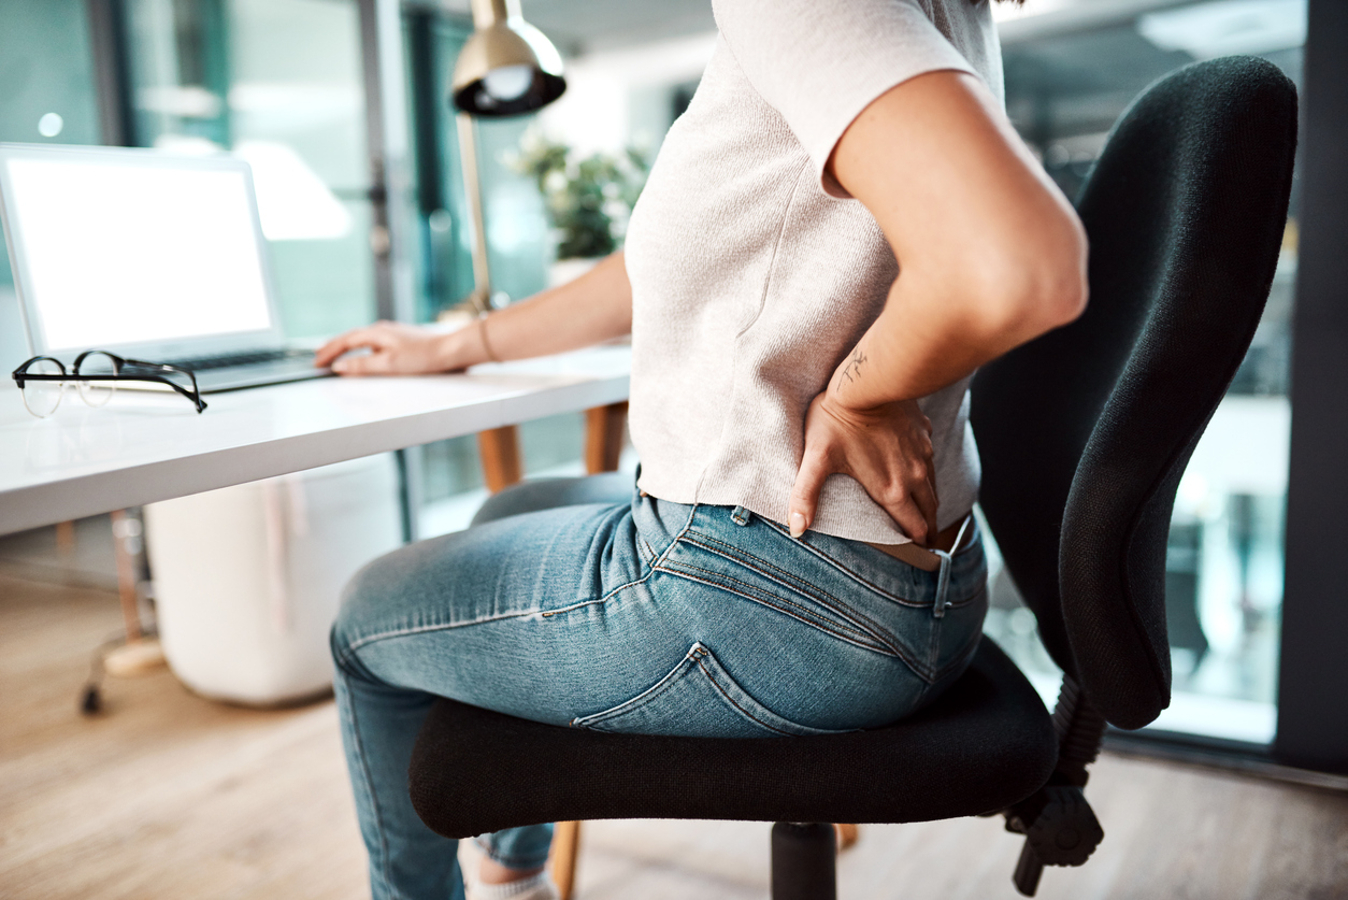 Má postura ao sentar pode contribuir para dor lombar